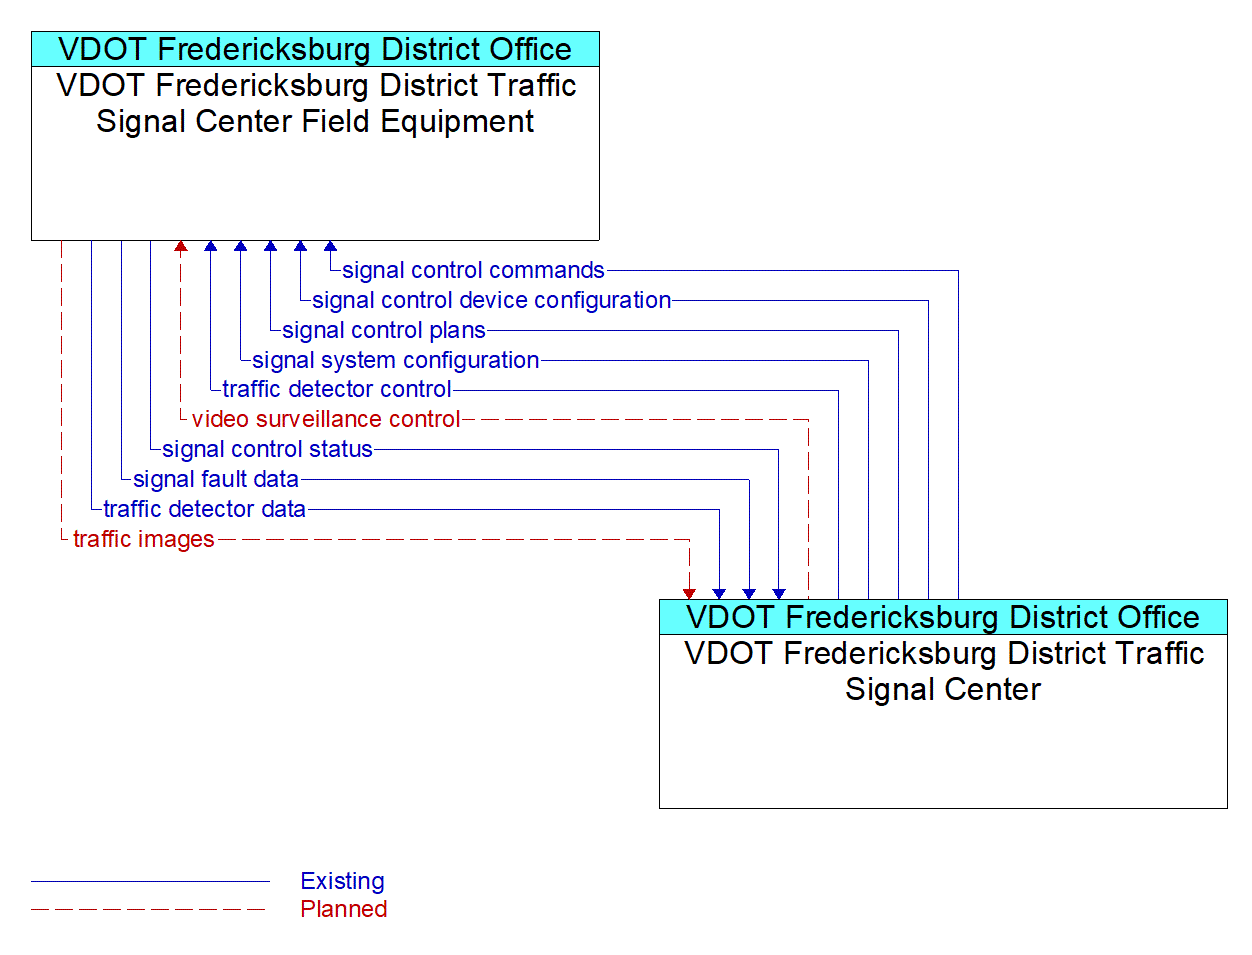 Service Graphic: Surface Street Control - VDOT Fredericksburg District Signal Center